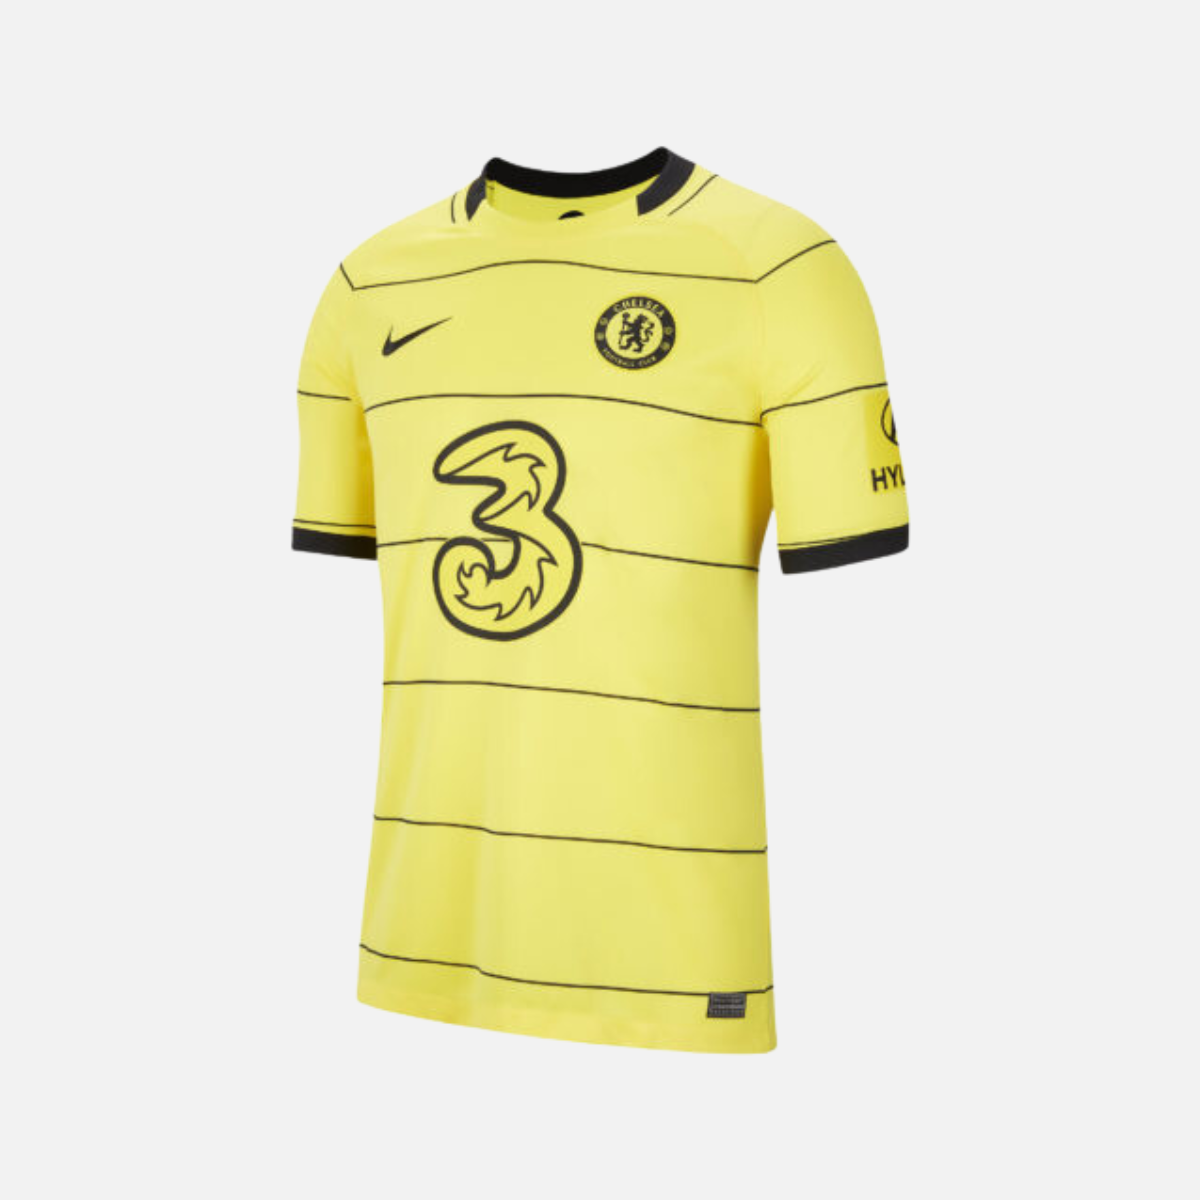 Nike Chelsea Men's Football T-shirt -Opti Yellow/Black